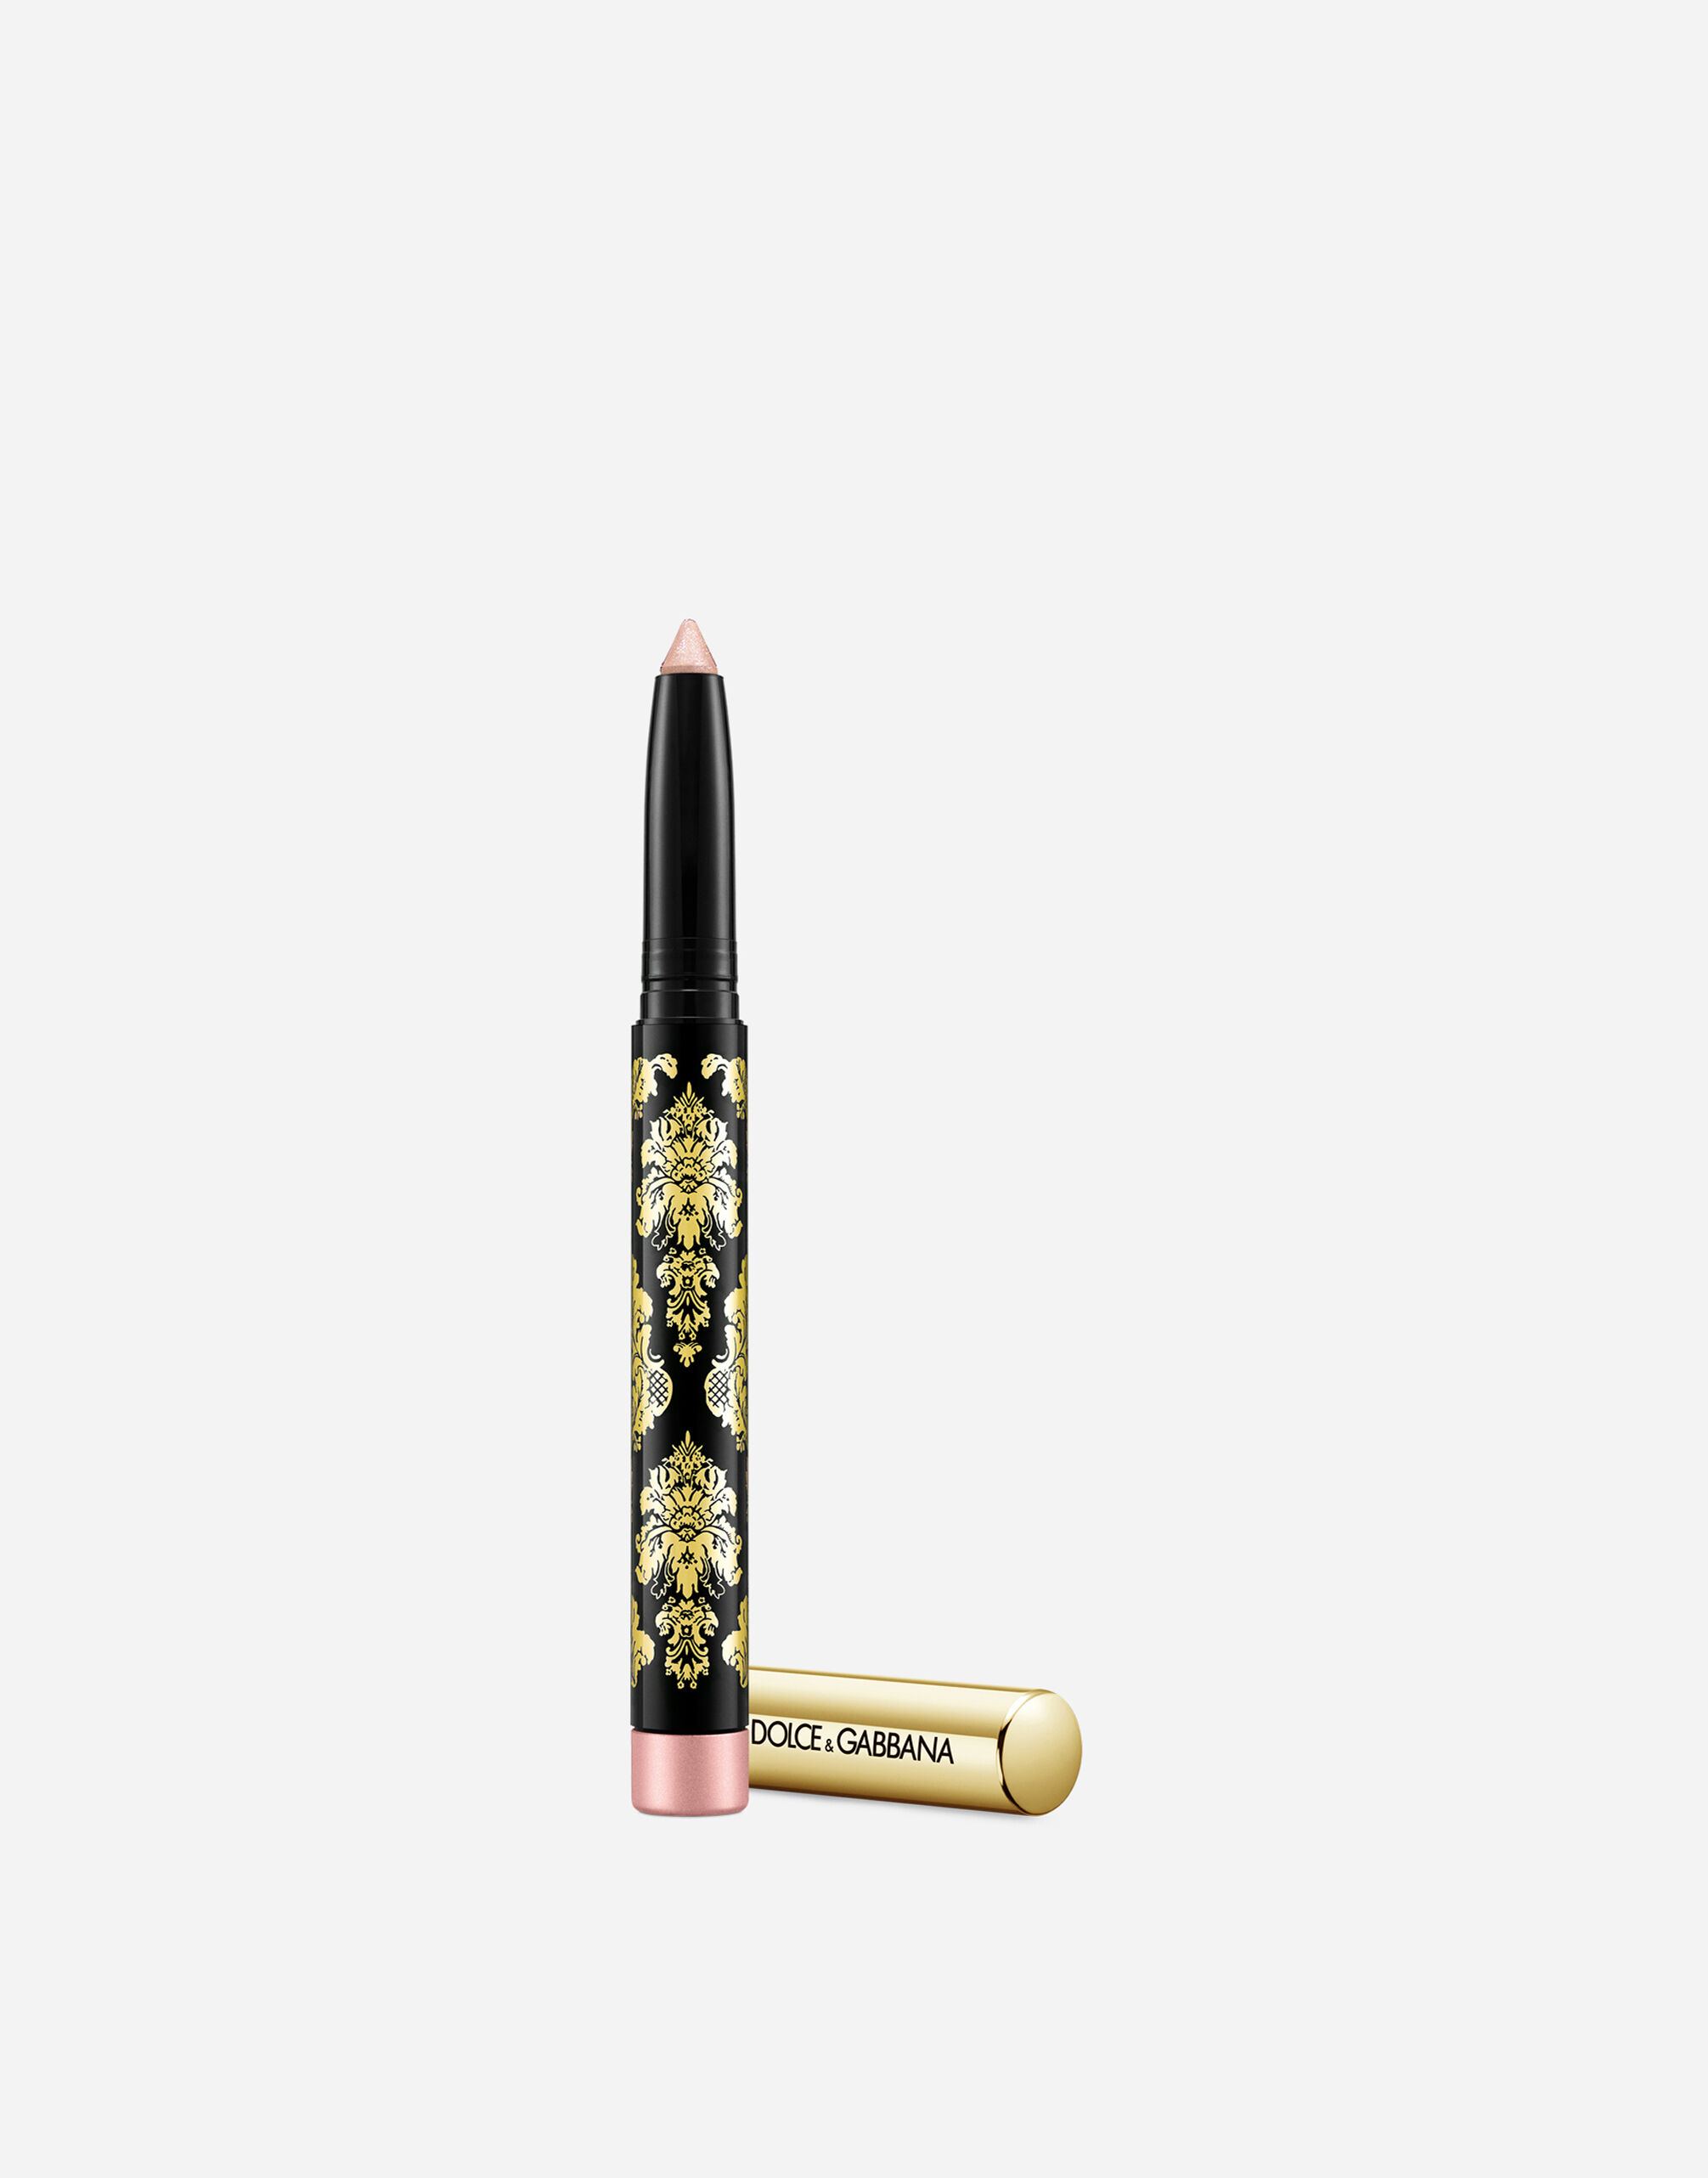 Тени-карандаш для глаз Dolce & Gabbana Intenseyes кремовые, №8 Pink, 1,4 г тени для глаз кремовые influence beauty alien тон 01 5 г